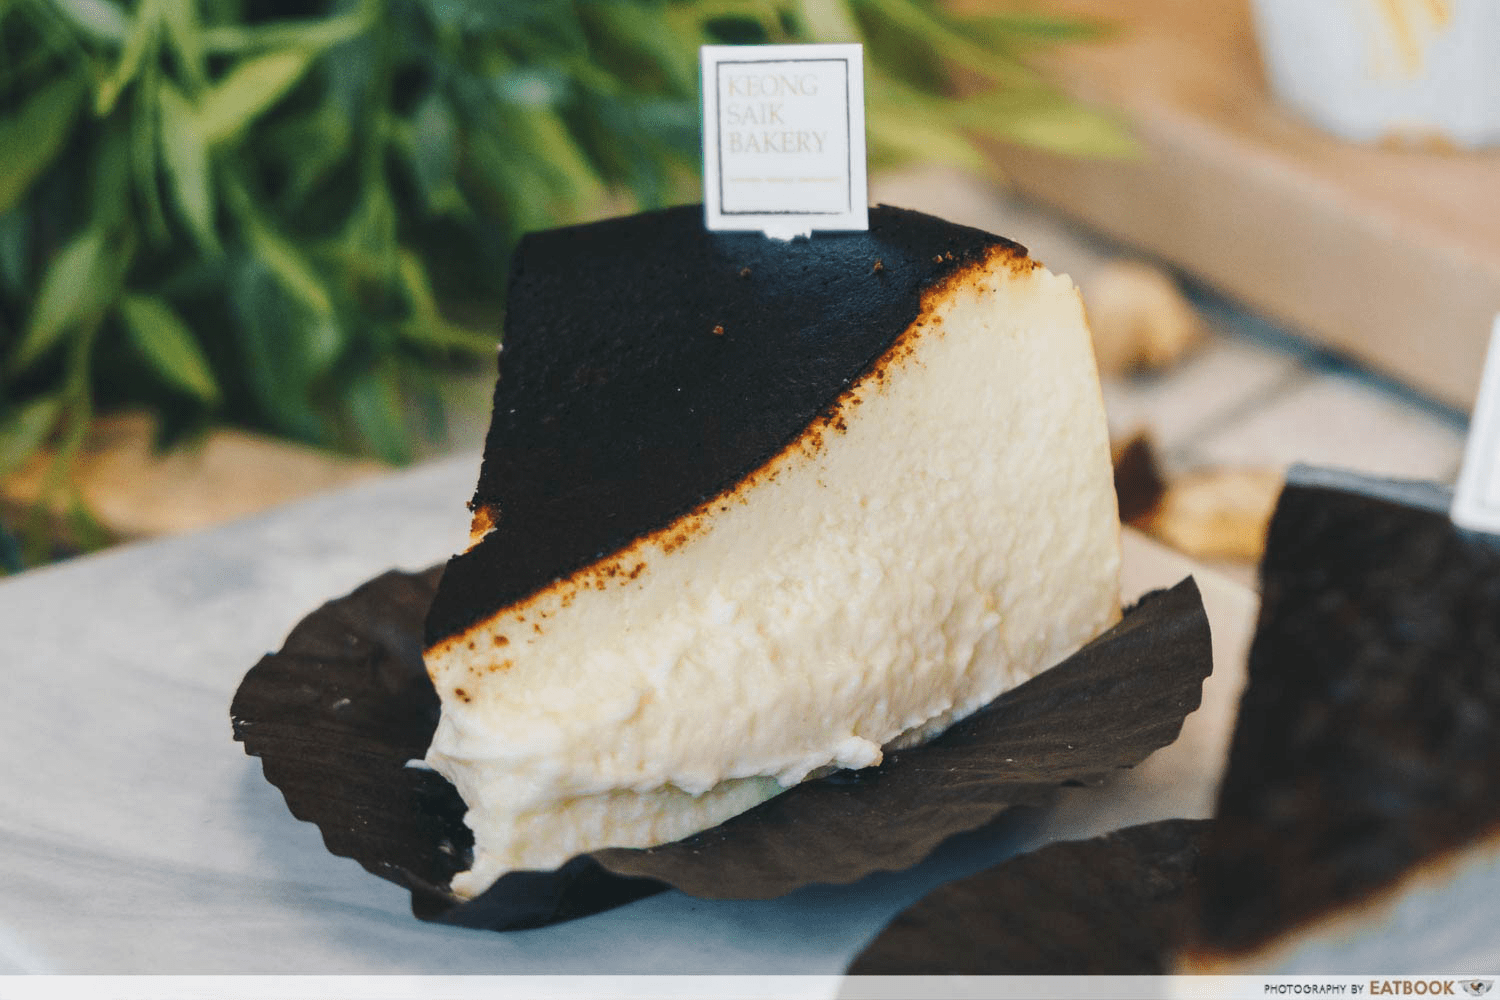 Burnt cheesecake - popular Singapore food that causes nausea